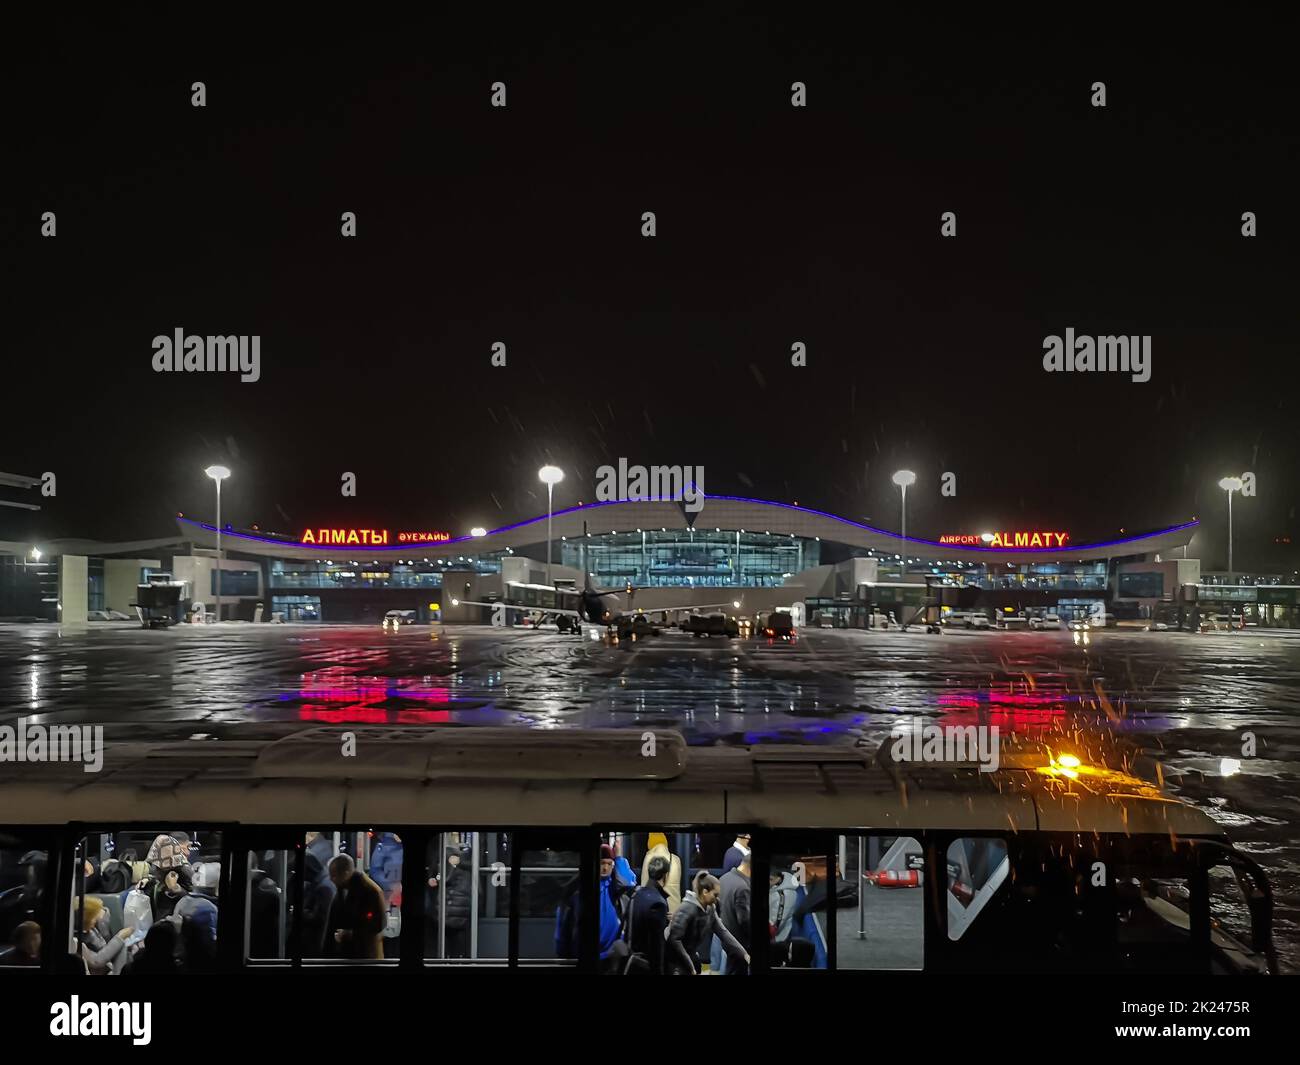 ALMATY, KAZAKHSTAN - NOVEMBER 7, 2019: Night view of Almaty International Airport, Kazakhstan Stock Photo